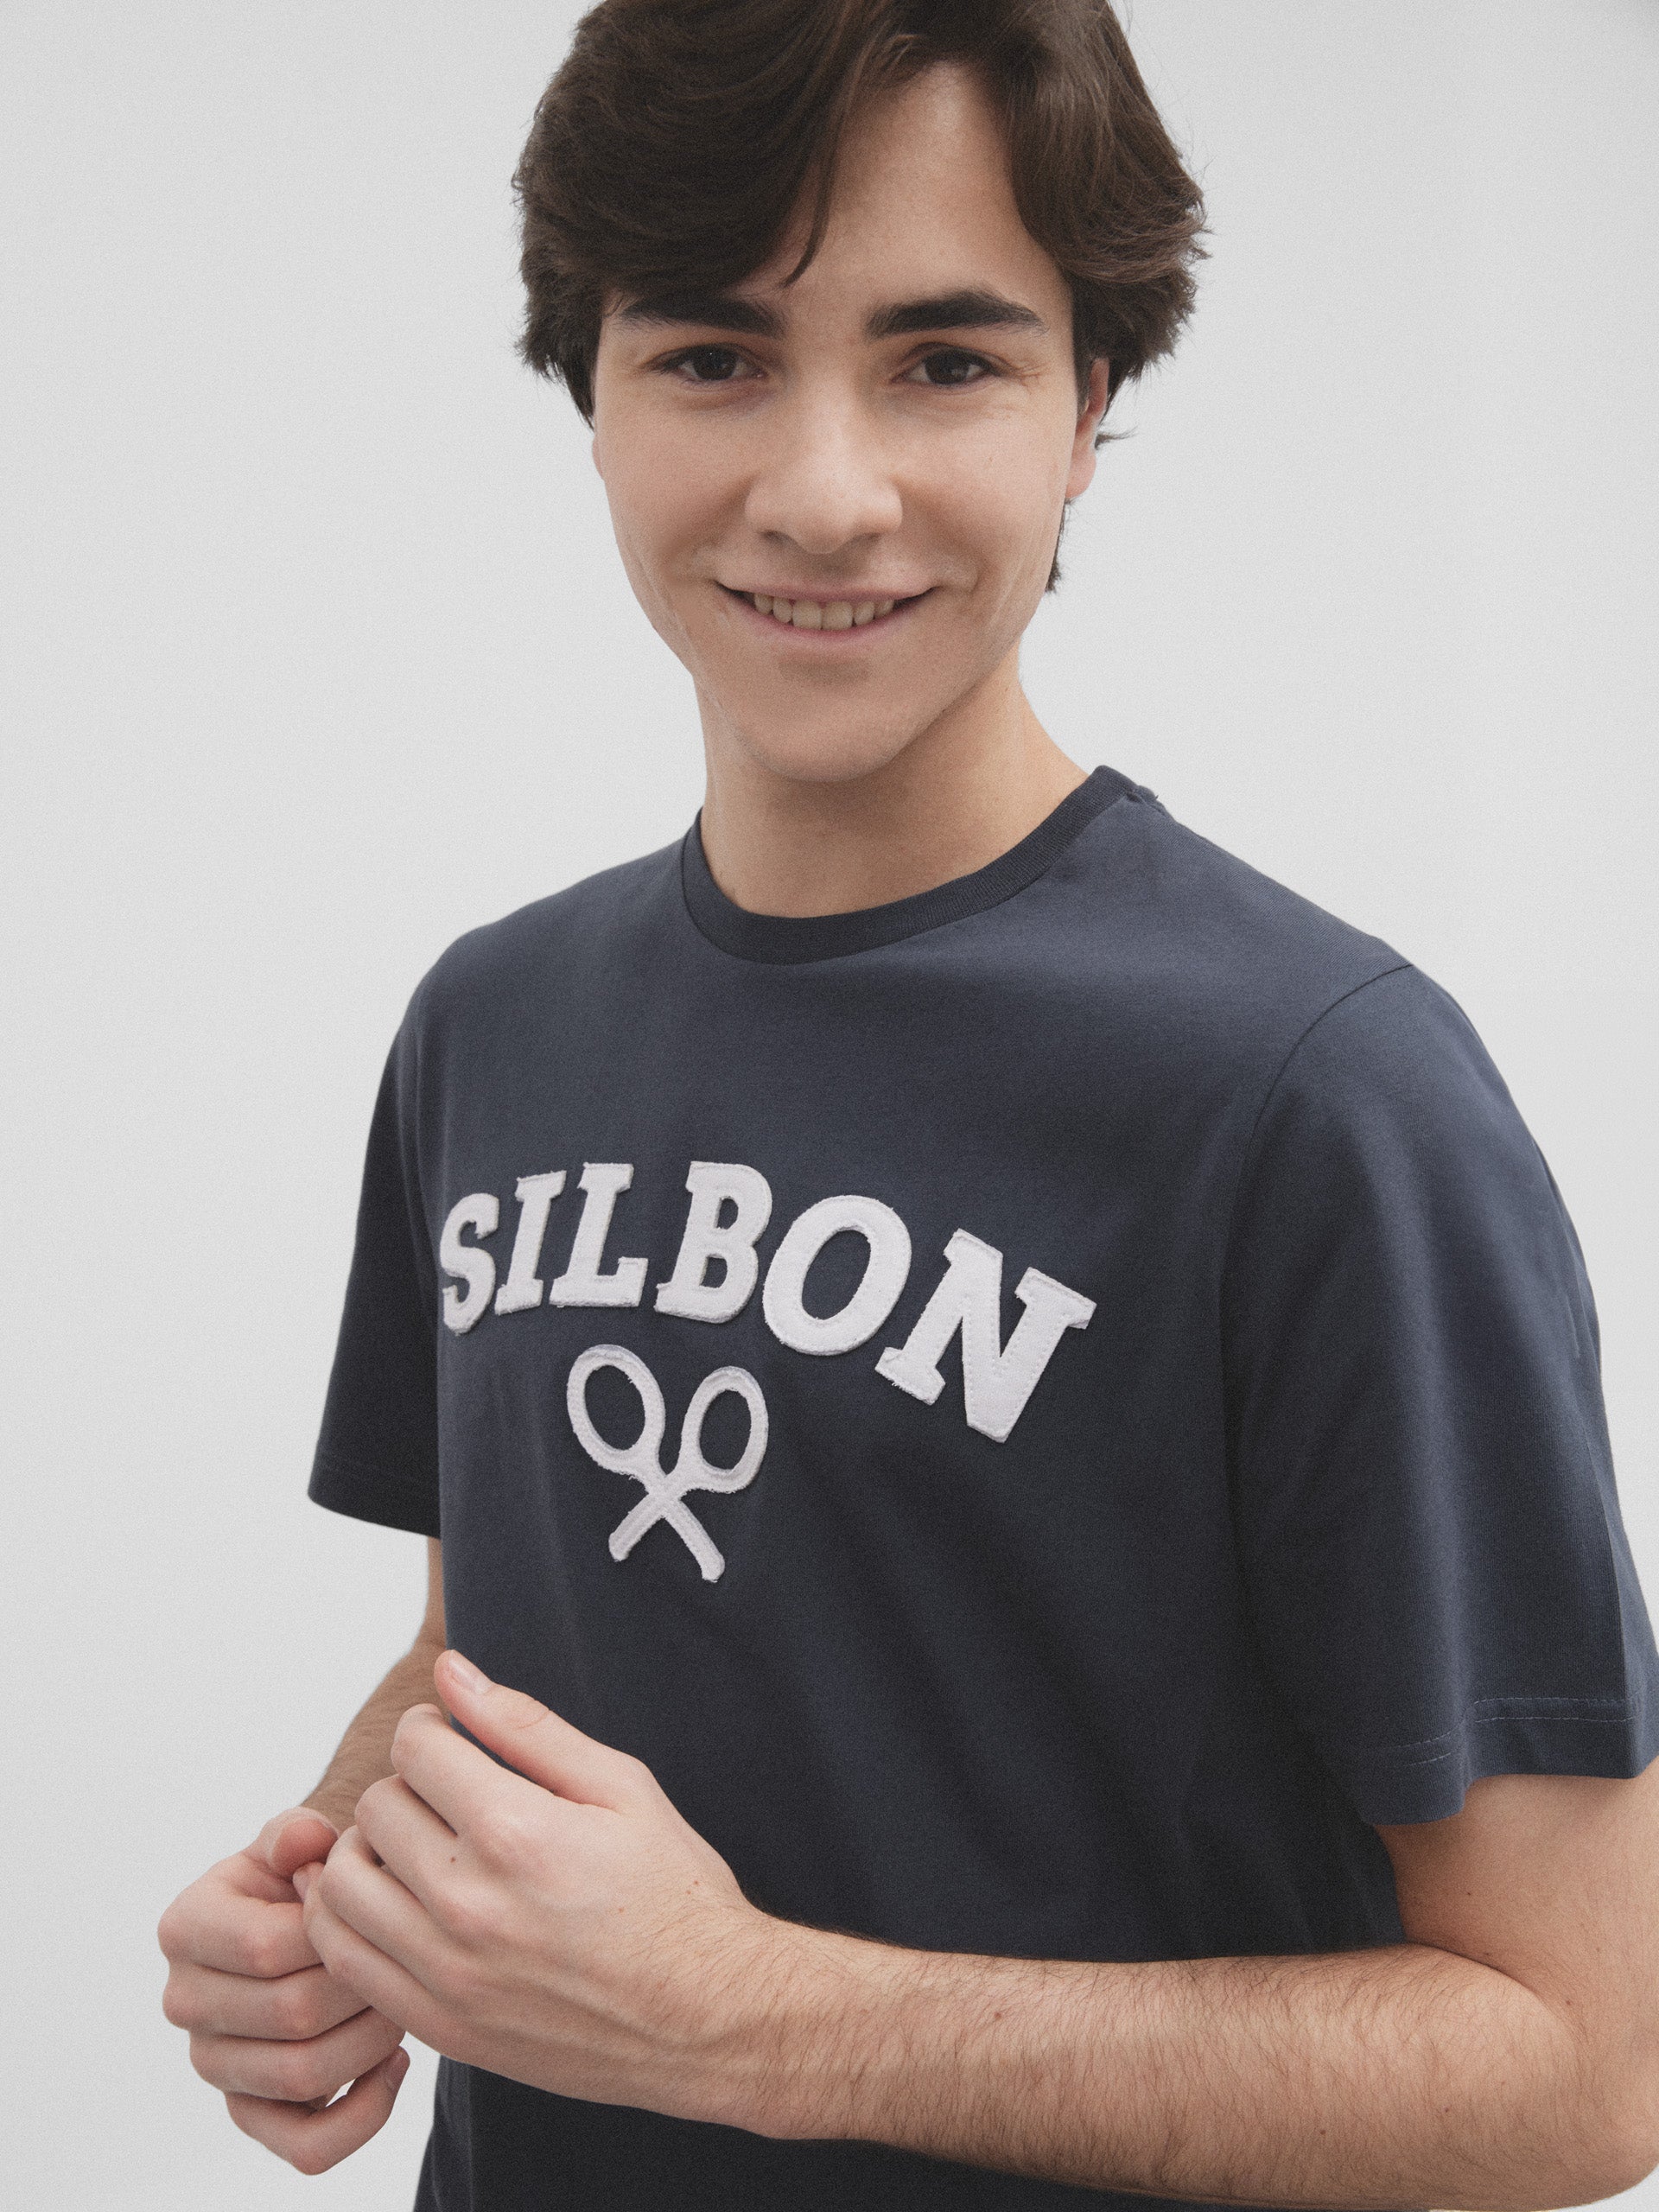 Silbon medium navy blue racket t-shirt